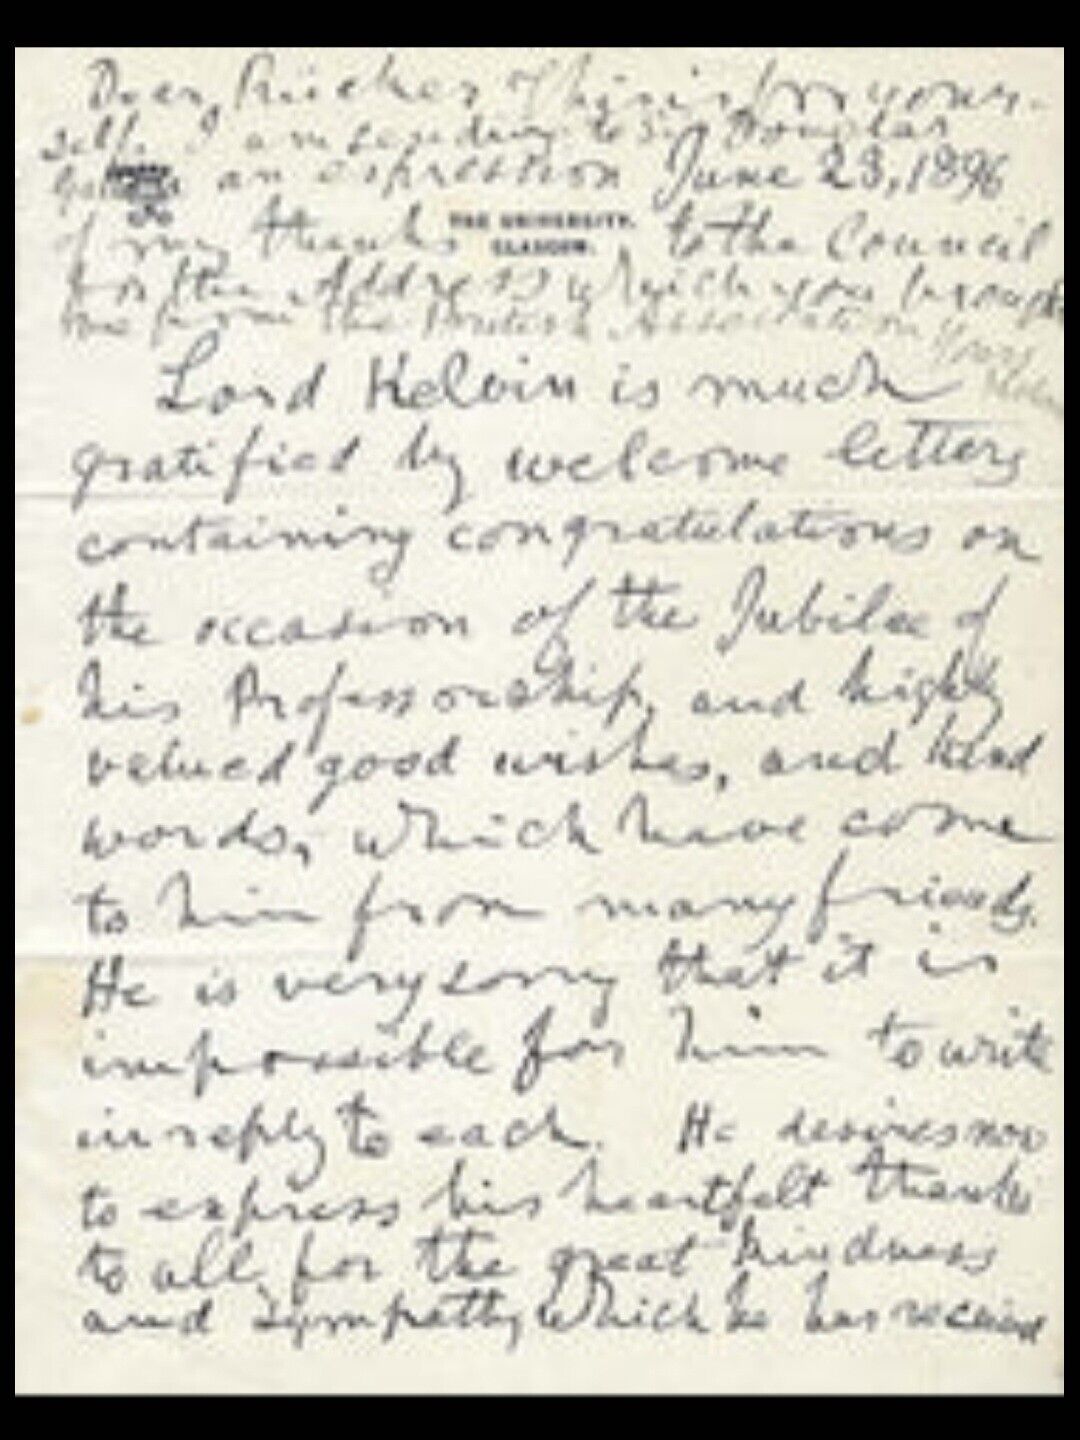 THERMODYNAMICS Scientist WILLIAM THOMSON 1ST BARON KELVIN Signed Letter